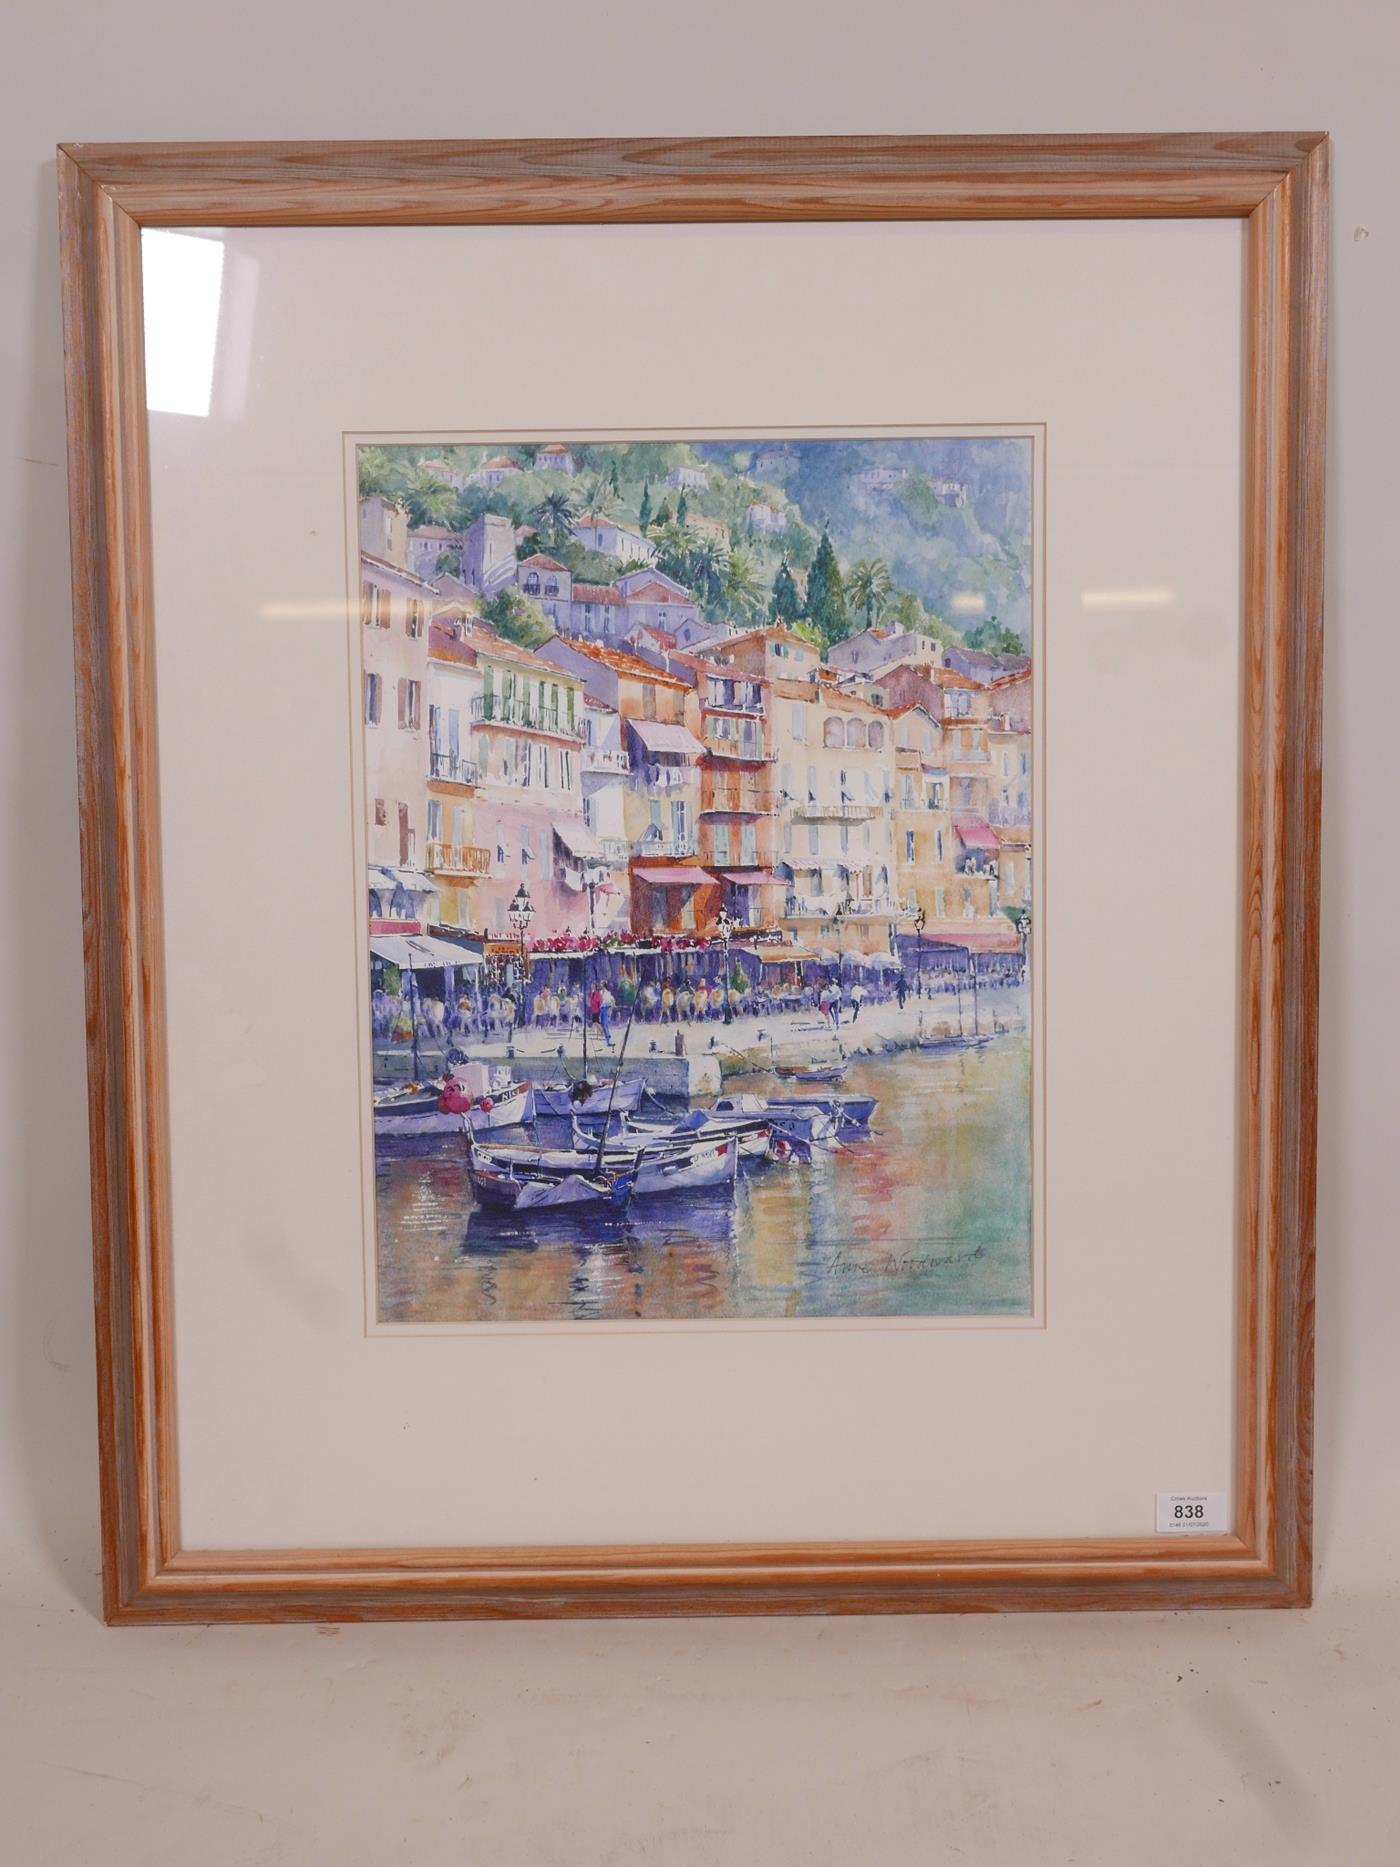 Anne Woodward (British, fl. C20th) 'Portofino', signed lower right, watercolour and gouache, 18" x - Image 2 of 6